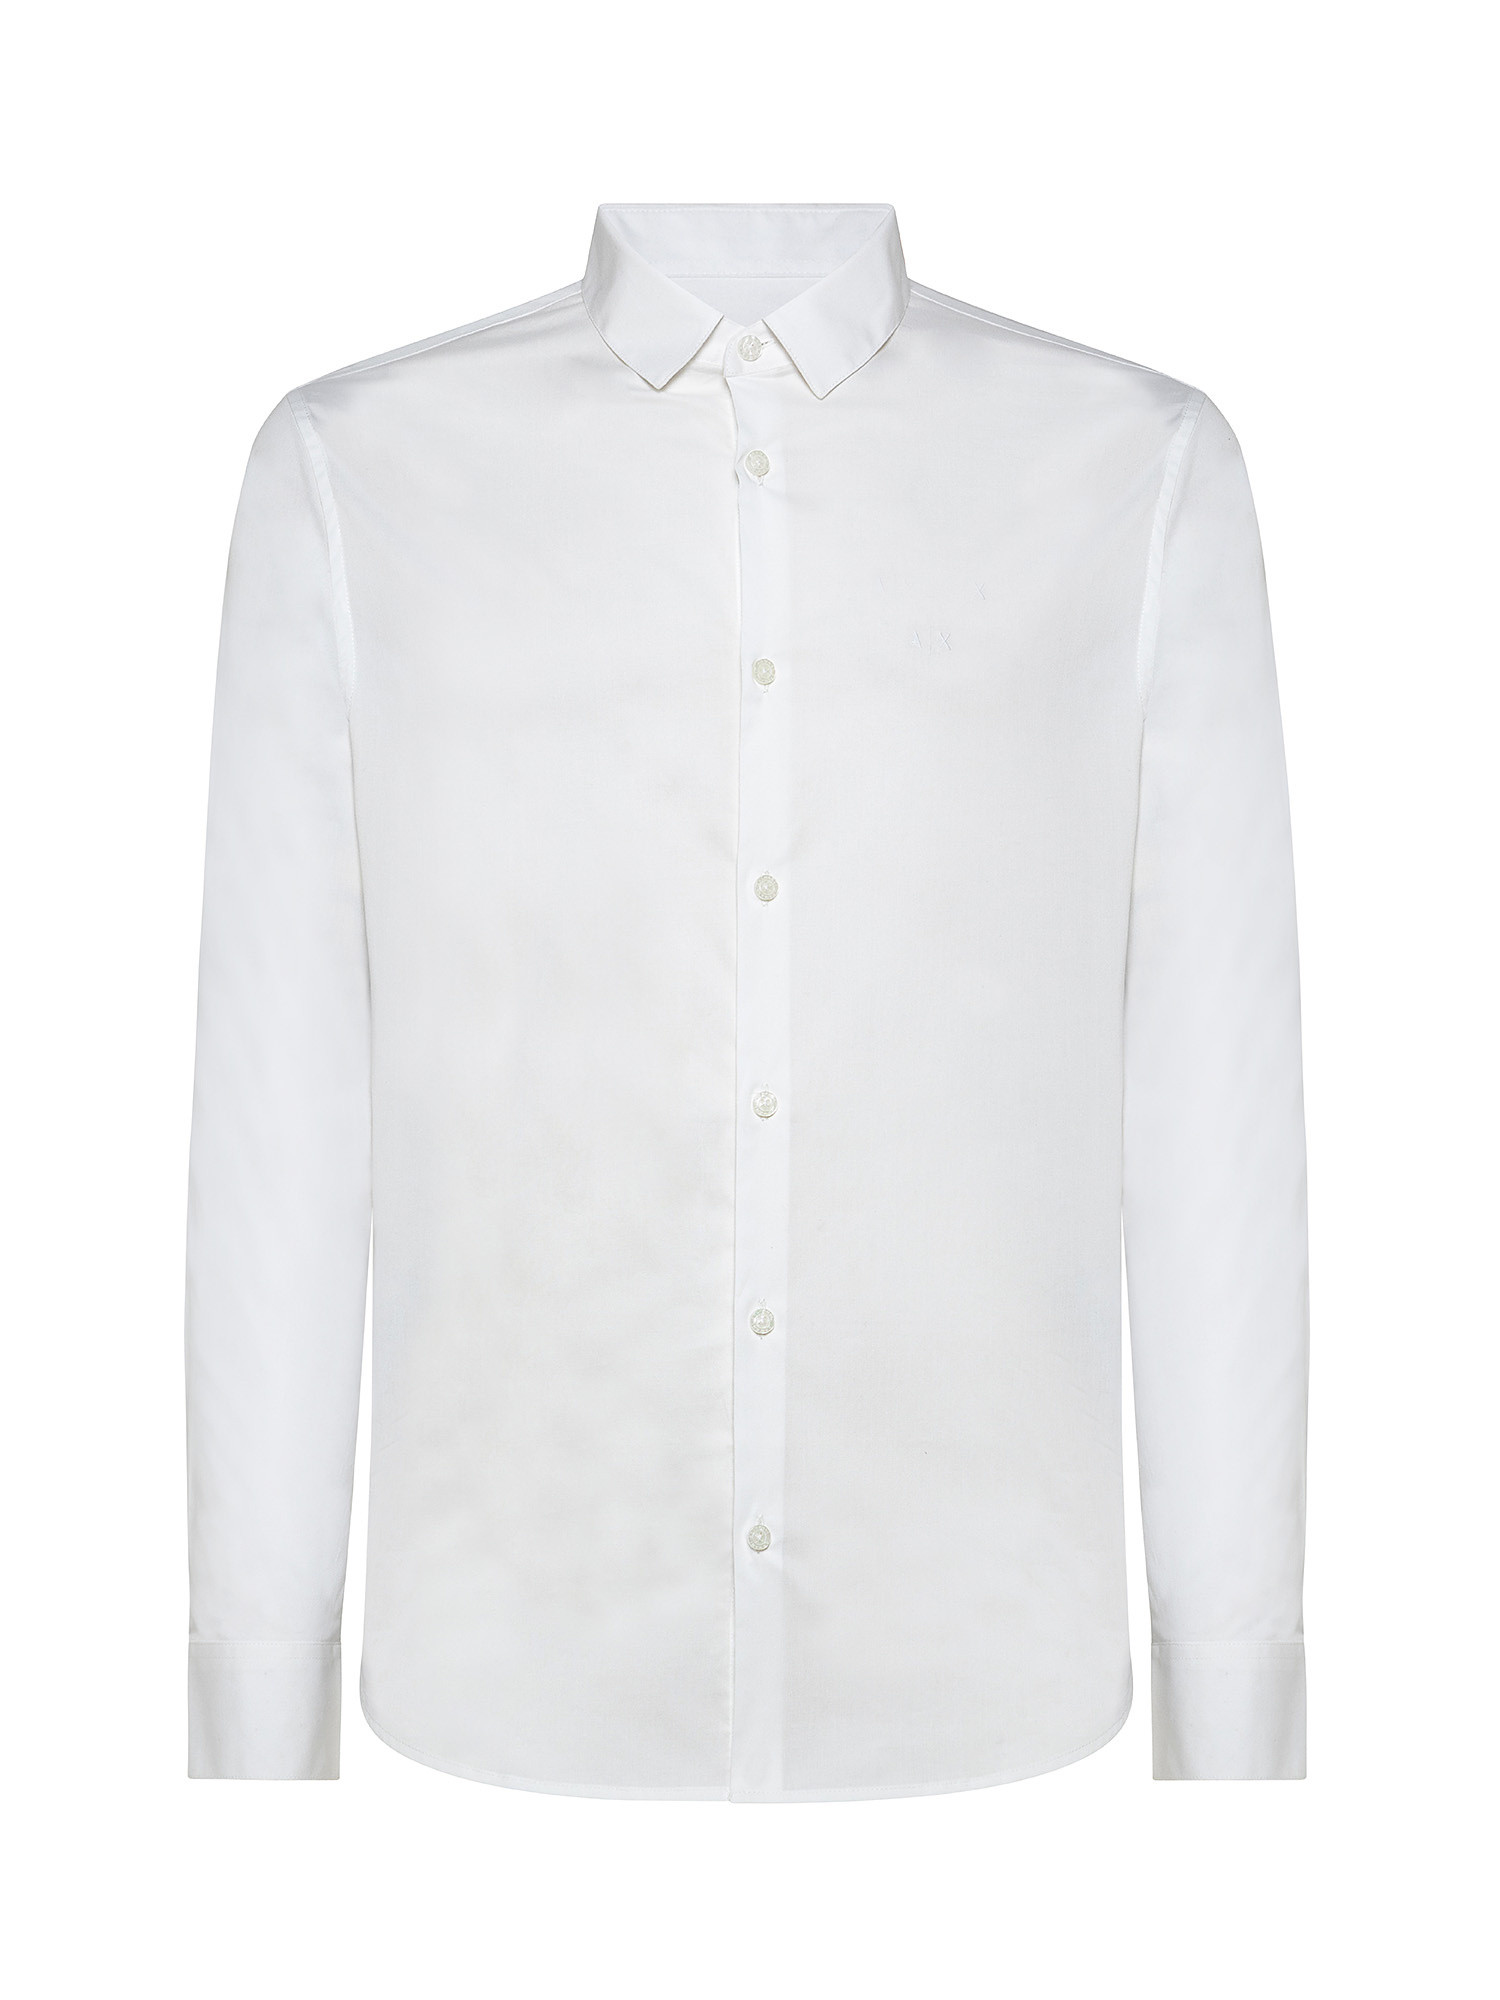 Camicia, Bianco, large